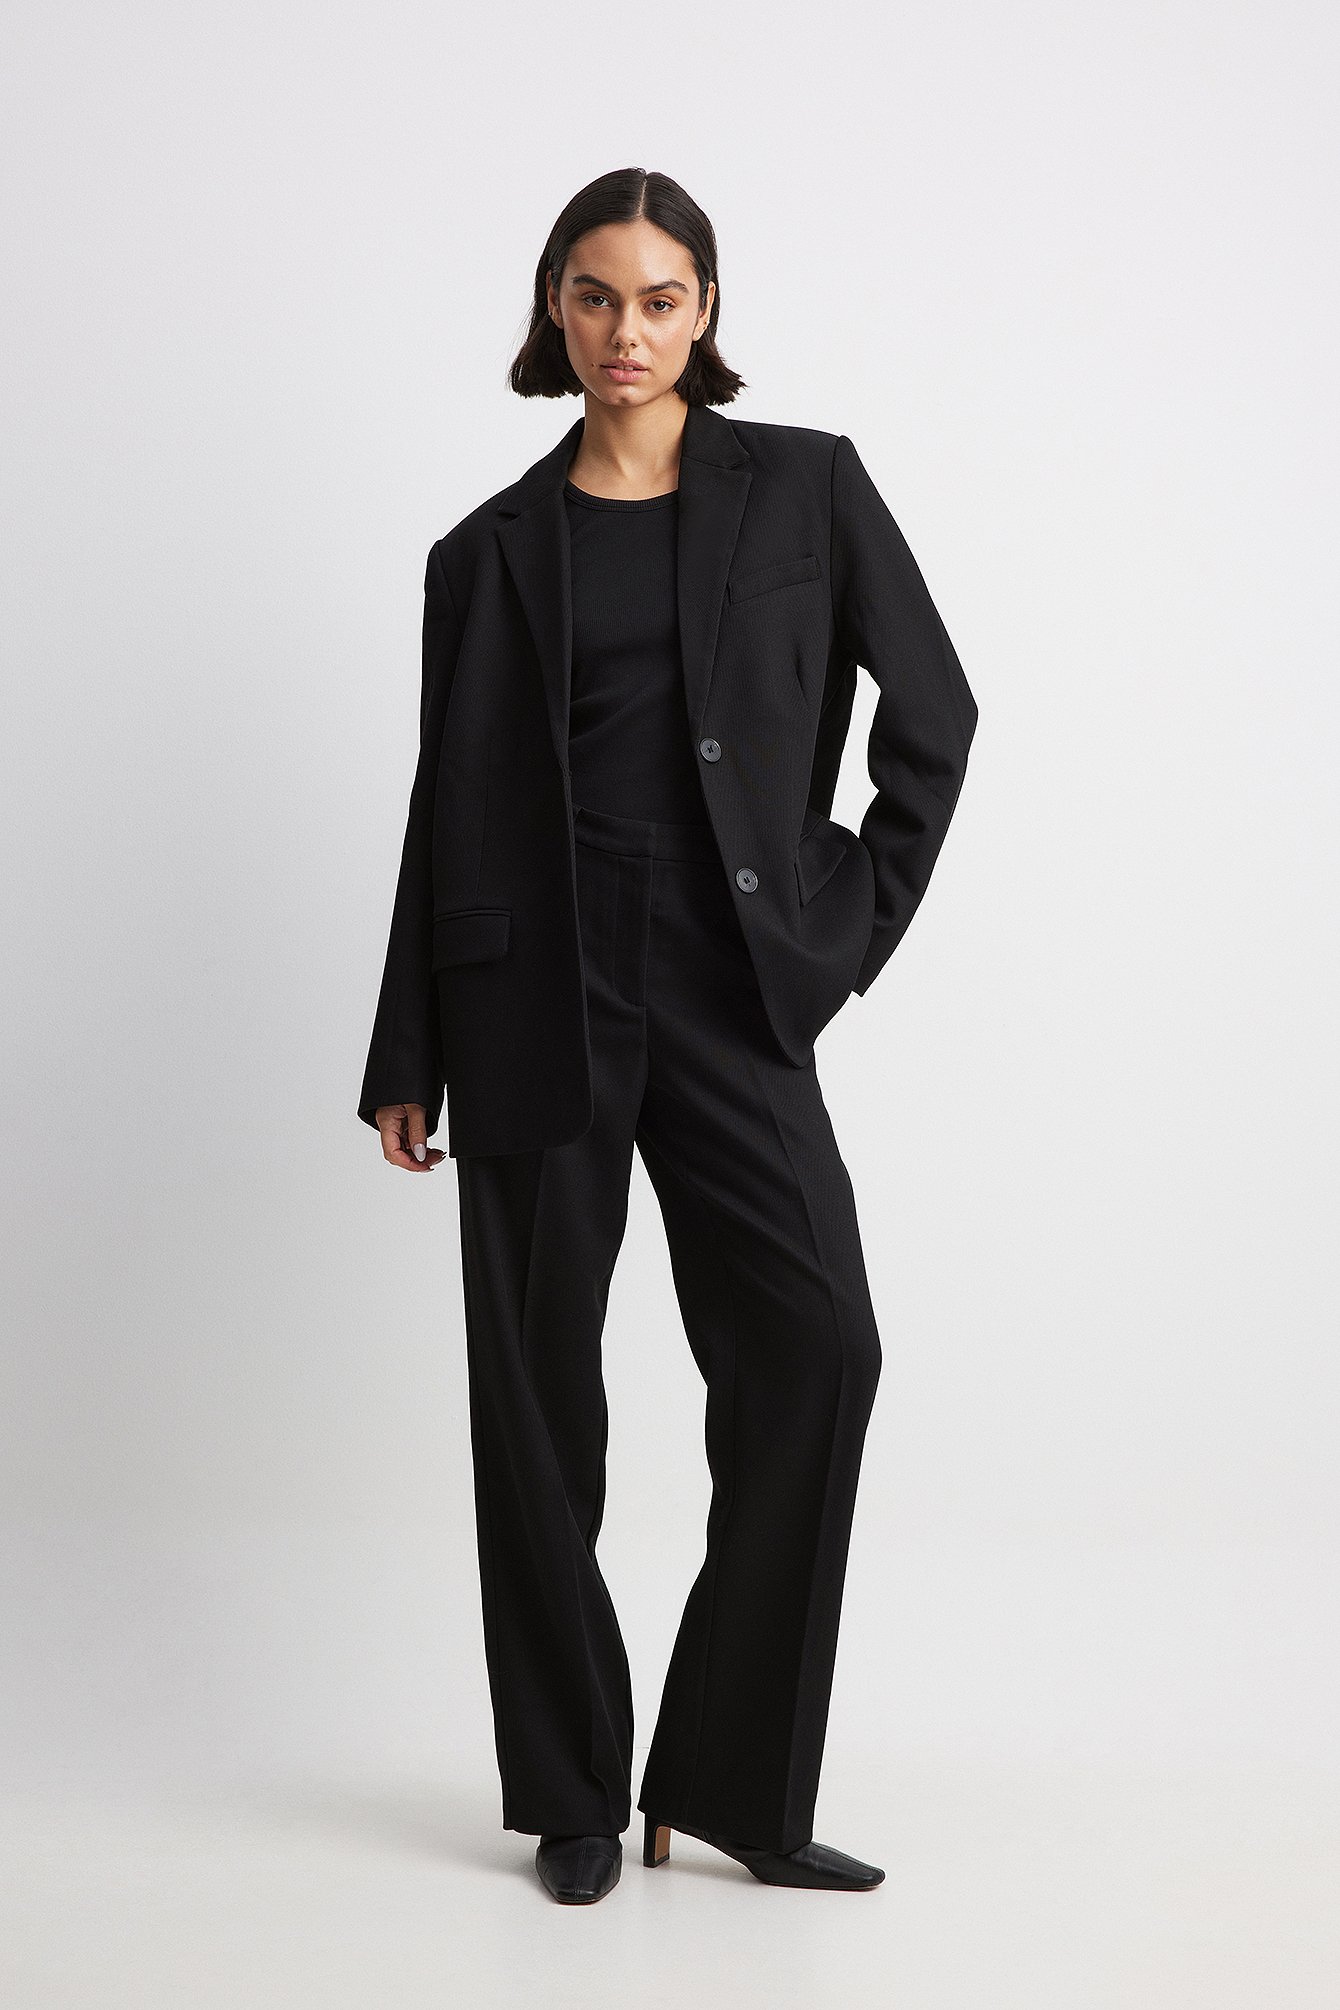 Brooks Brothers Caroline Fit Wool Dress Pants Black Straight Leg Lined  Womens 8 | eBay